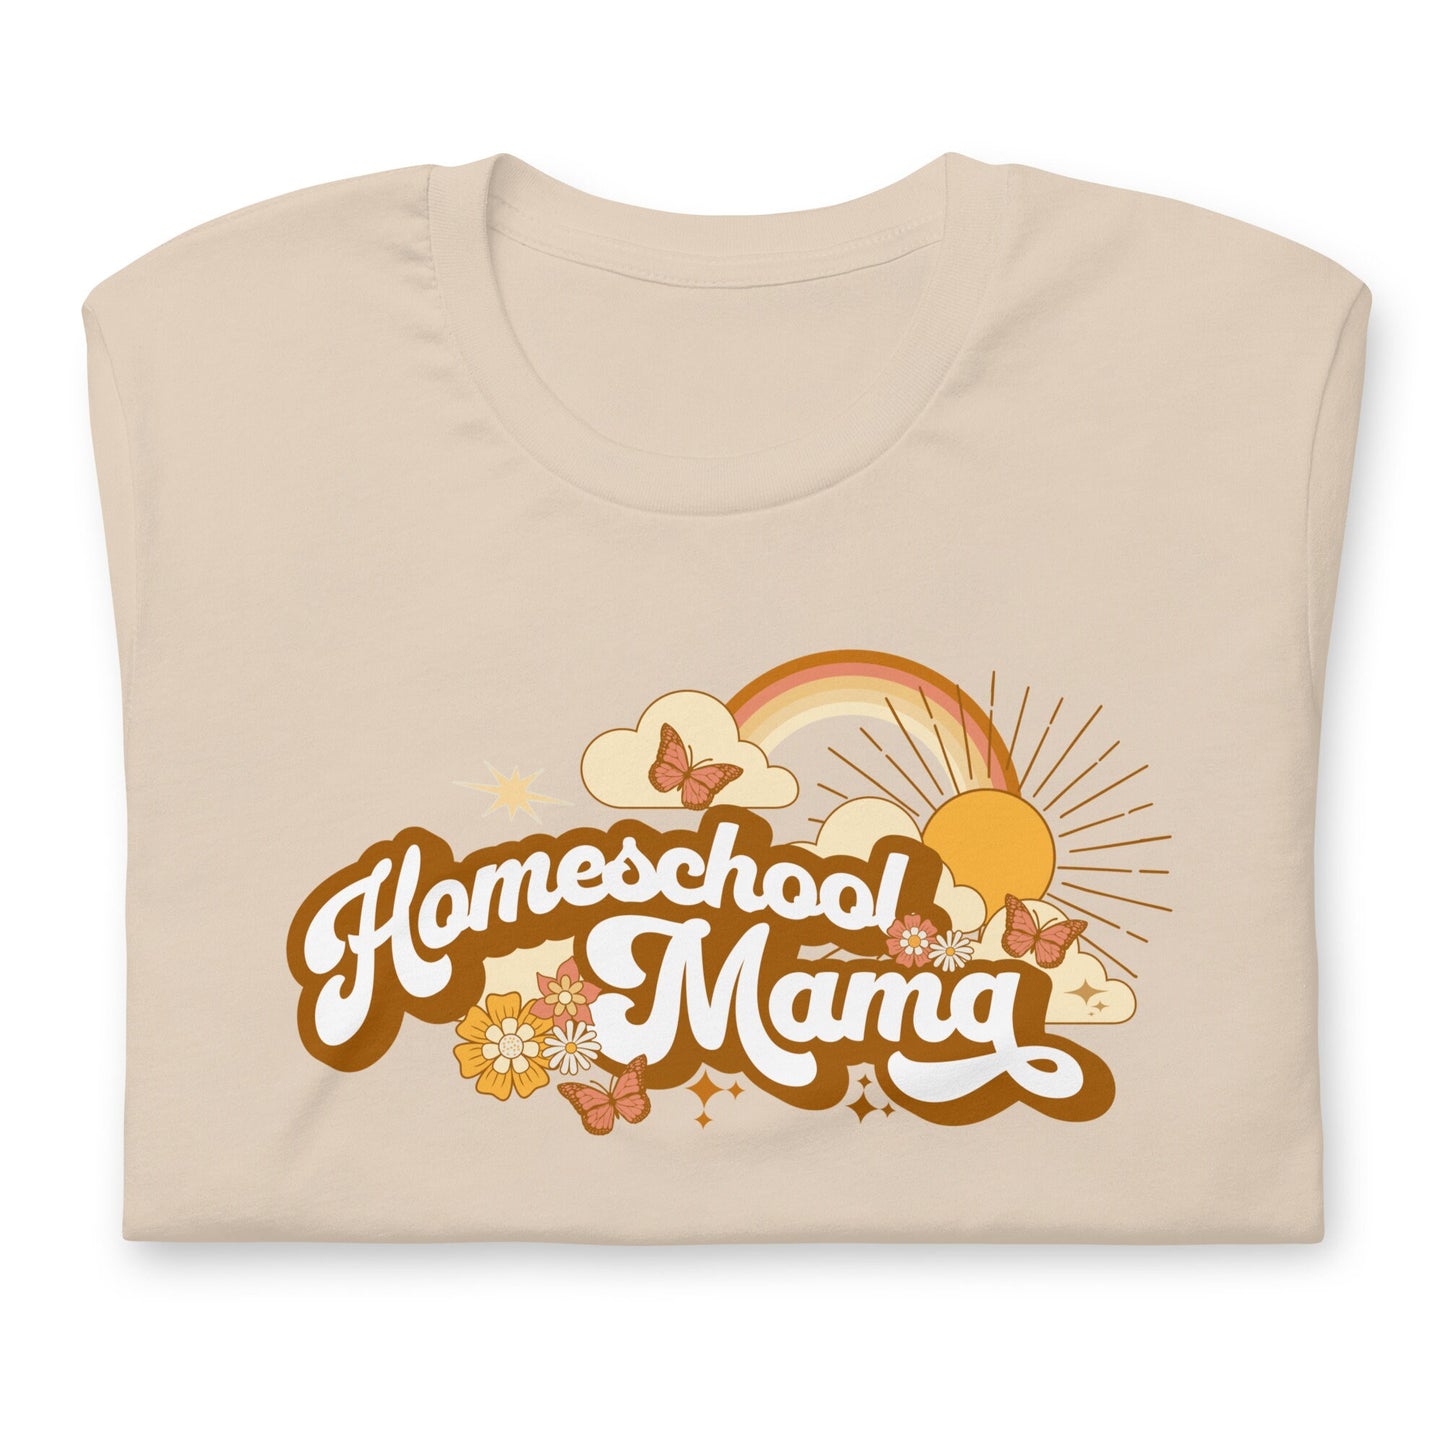 Homeschool Mama t-shirt